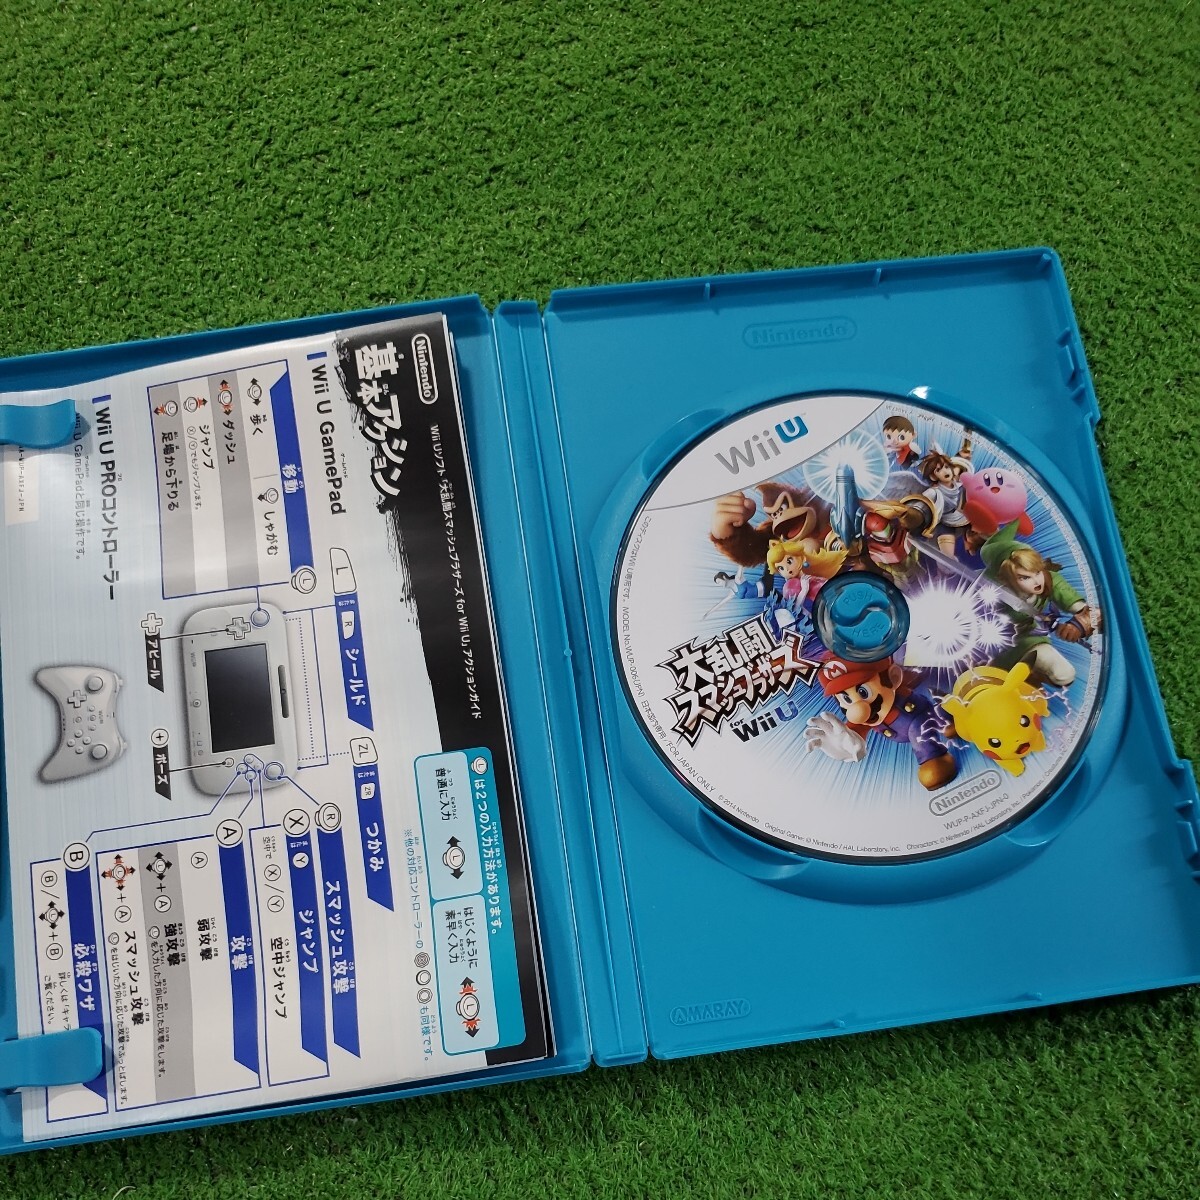  nintendo Wii U soft 10шт.@ продажа комплектом большой ..s mash Brothers Mario Cart s pra палец на ноге n super Mario производитель Dragon Quest 